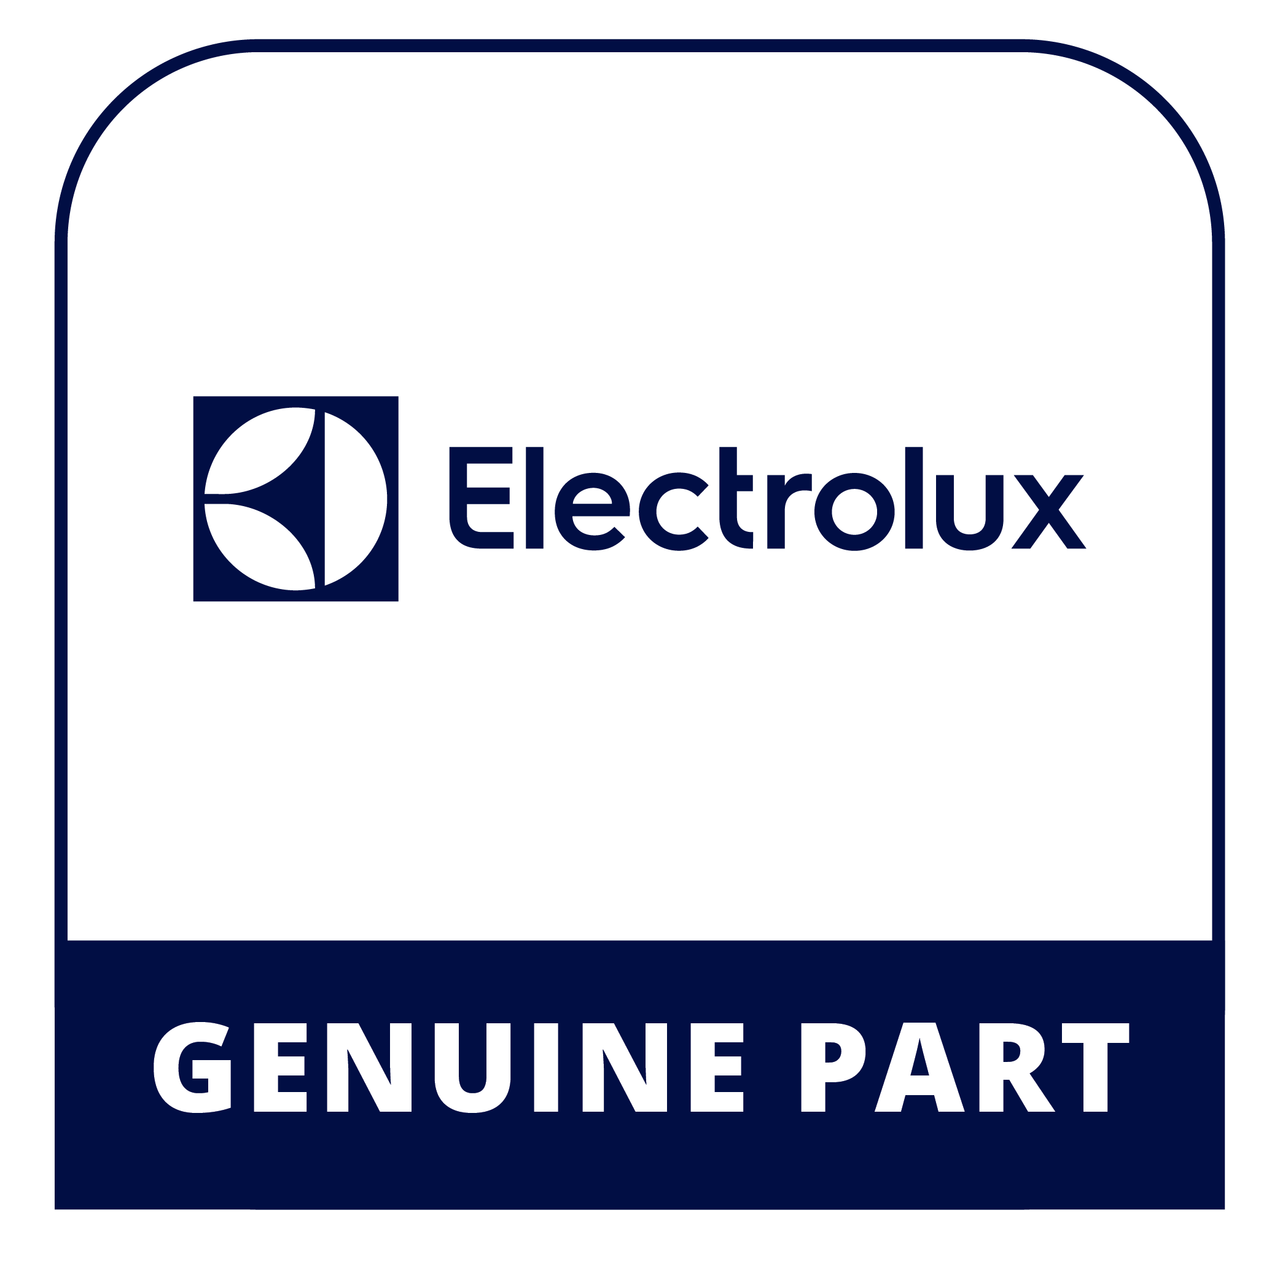 Frigidaire - Electrolux 5304501618 Knob - Genuine Electrolux Part